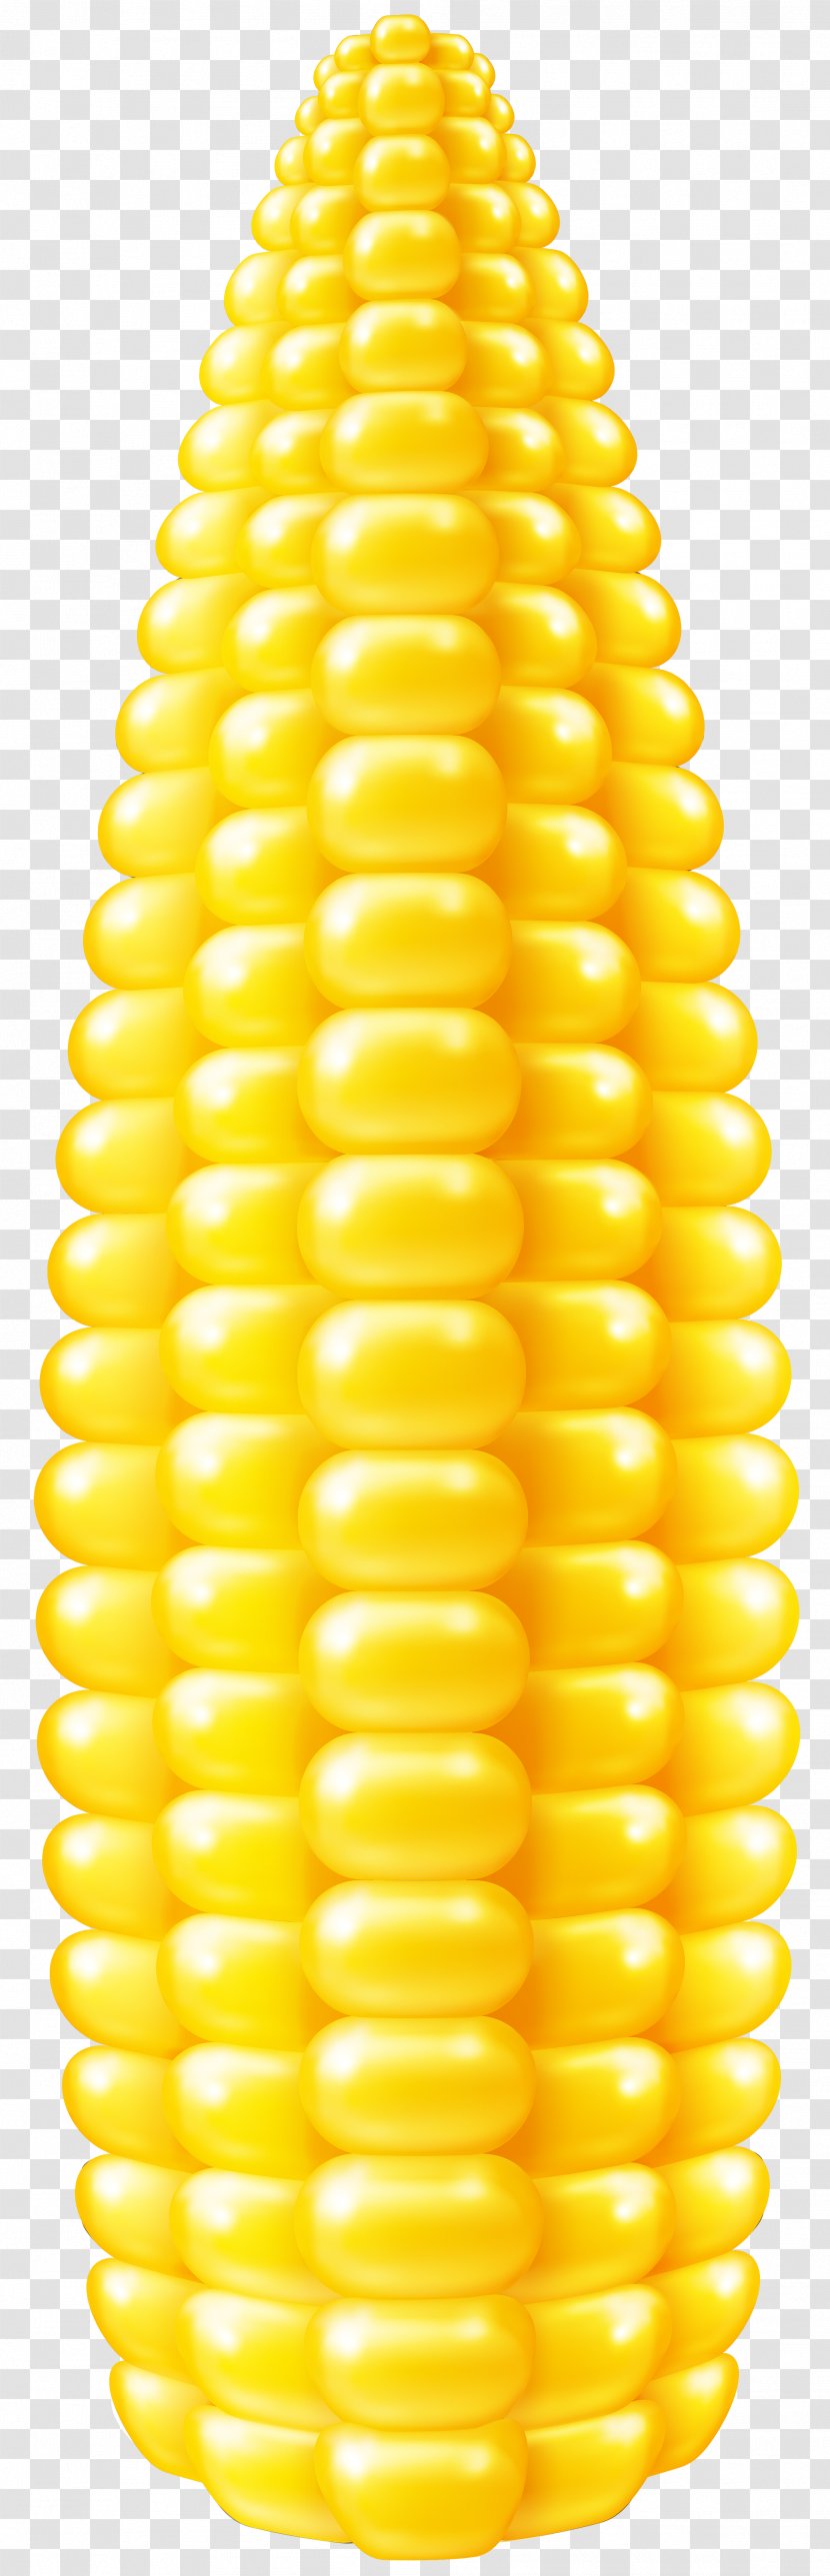 Corn On The Cob Maize Stock Illustration Corncob - Clip Art Image Transparent PNG